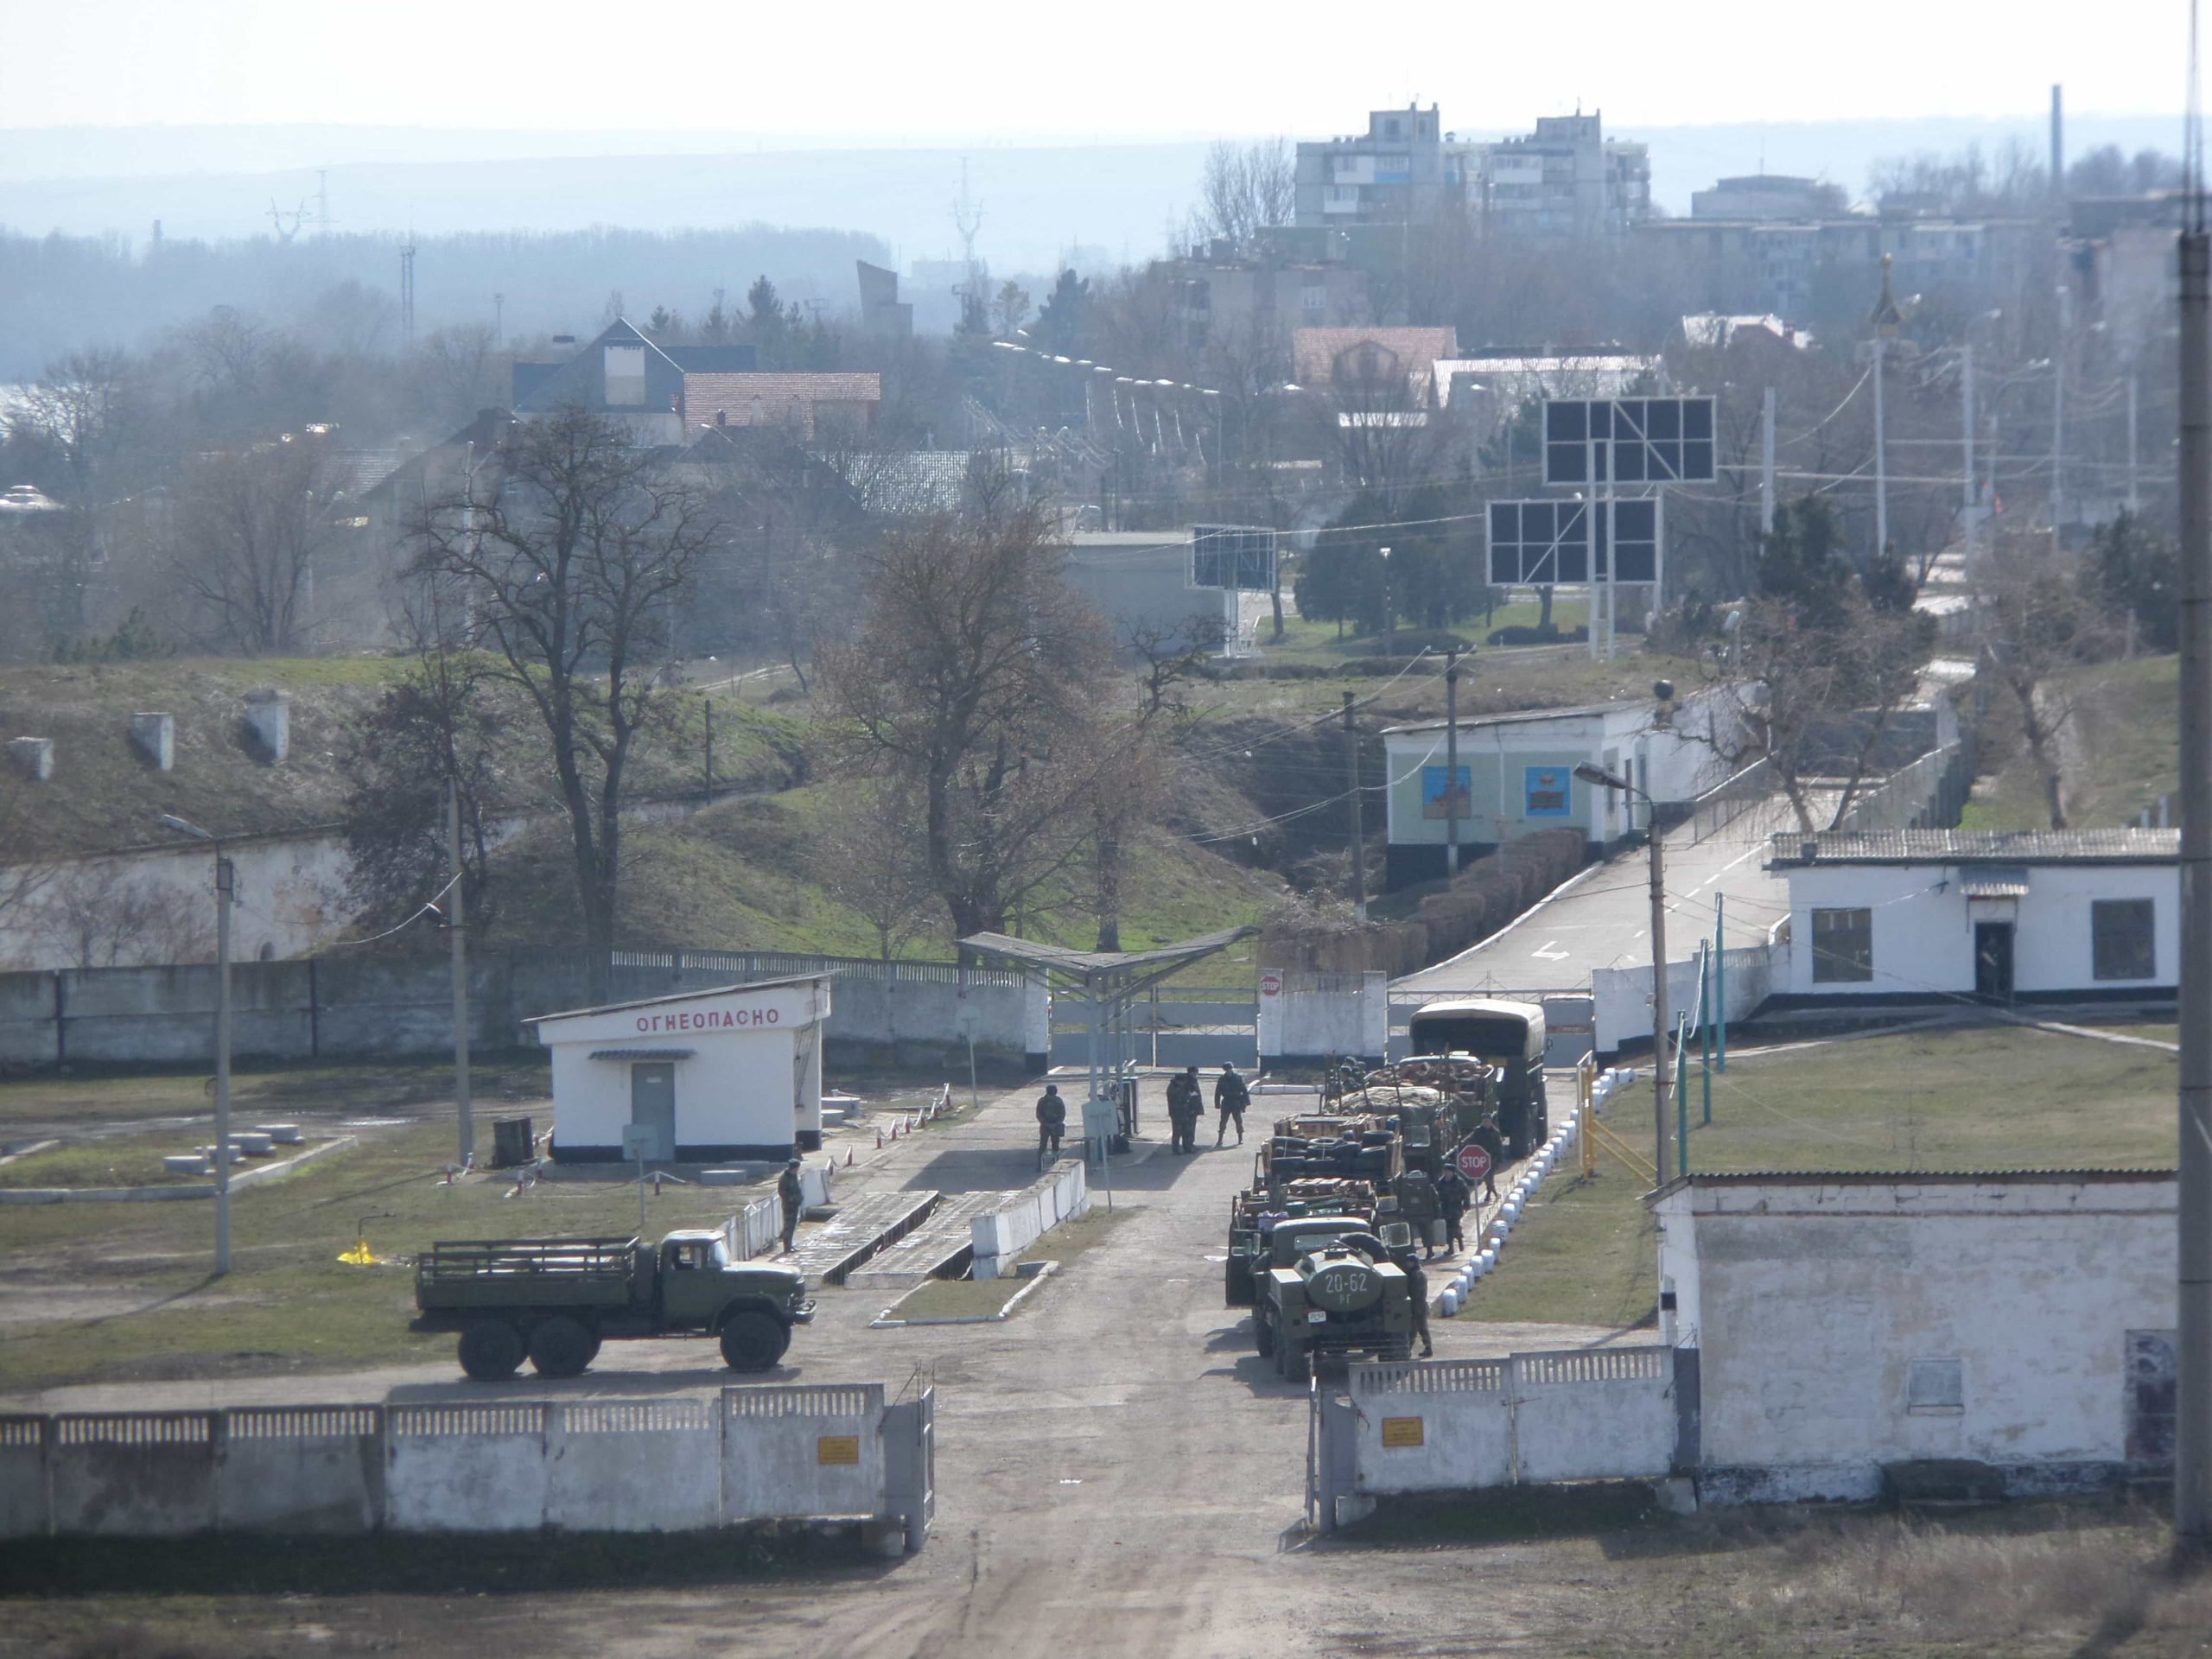 A Russian military base Image: Steven MacKenzie